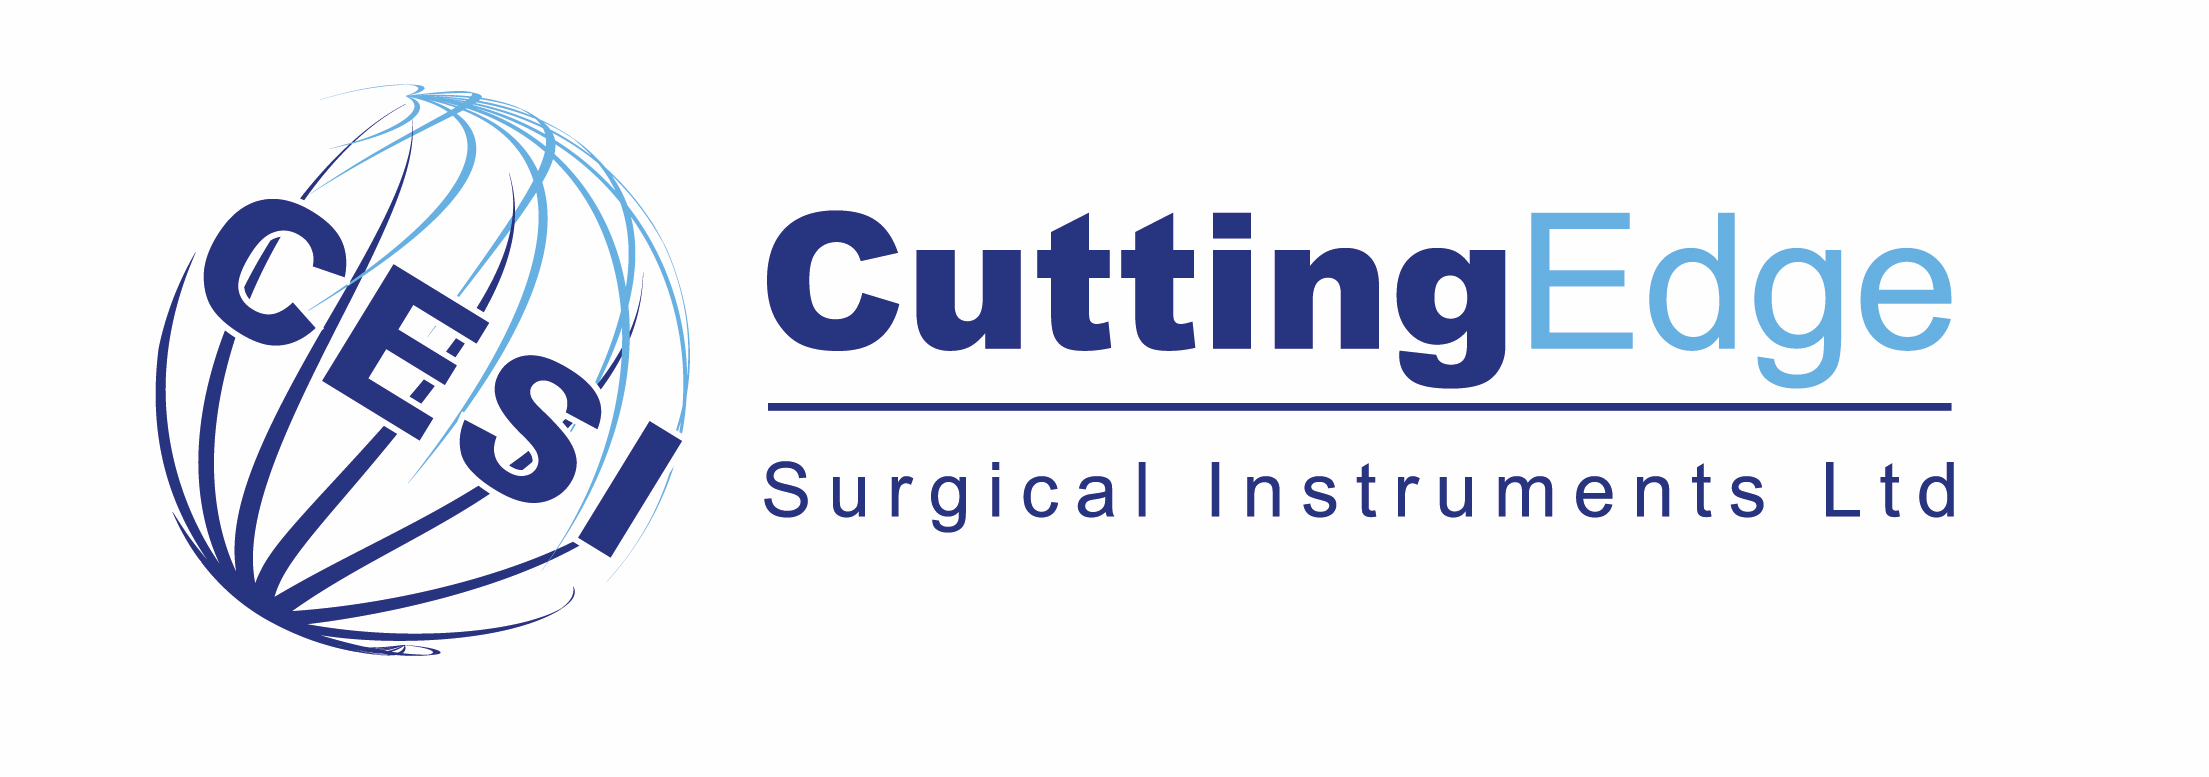 Cutting Edge Surgical